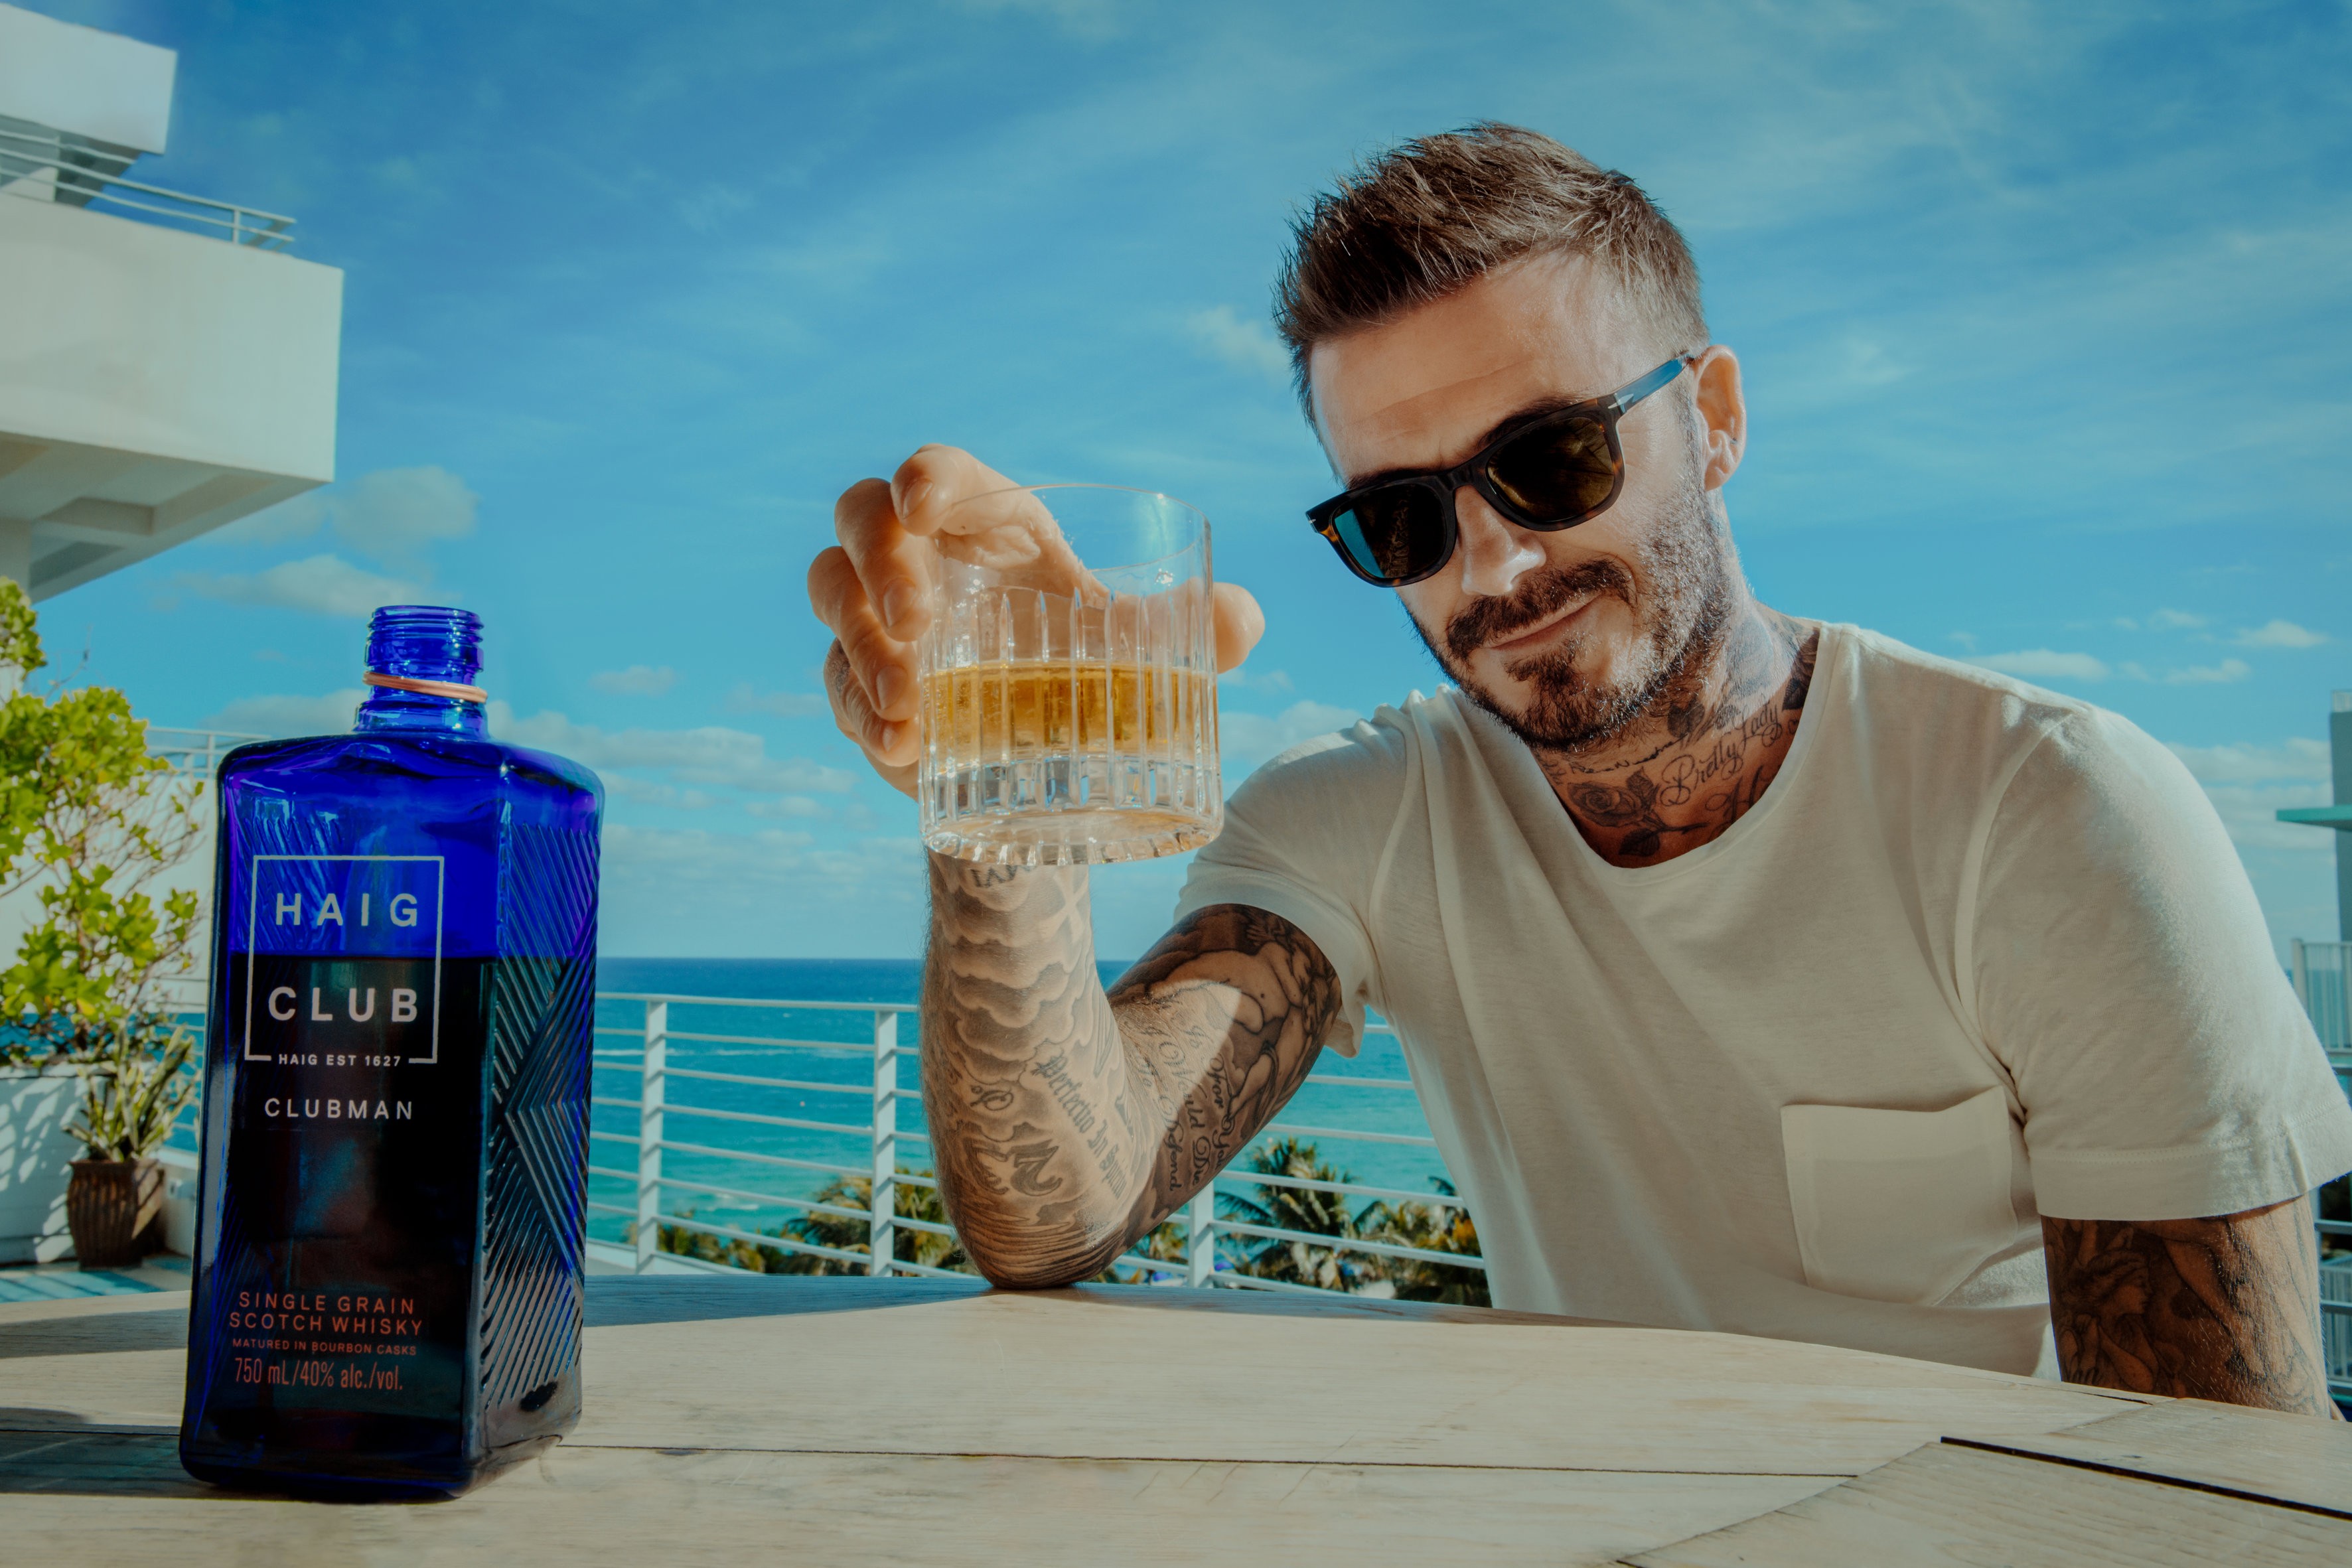 David Beckham Launches New Haig Club Clubman Scotch Whisky | Miami New Times